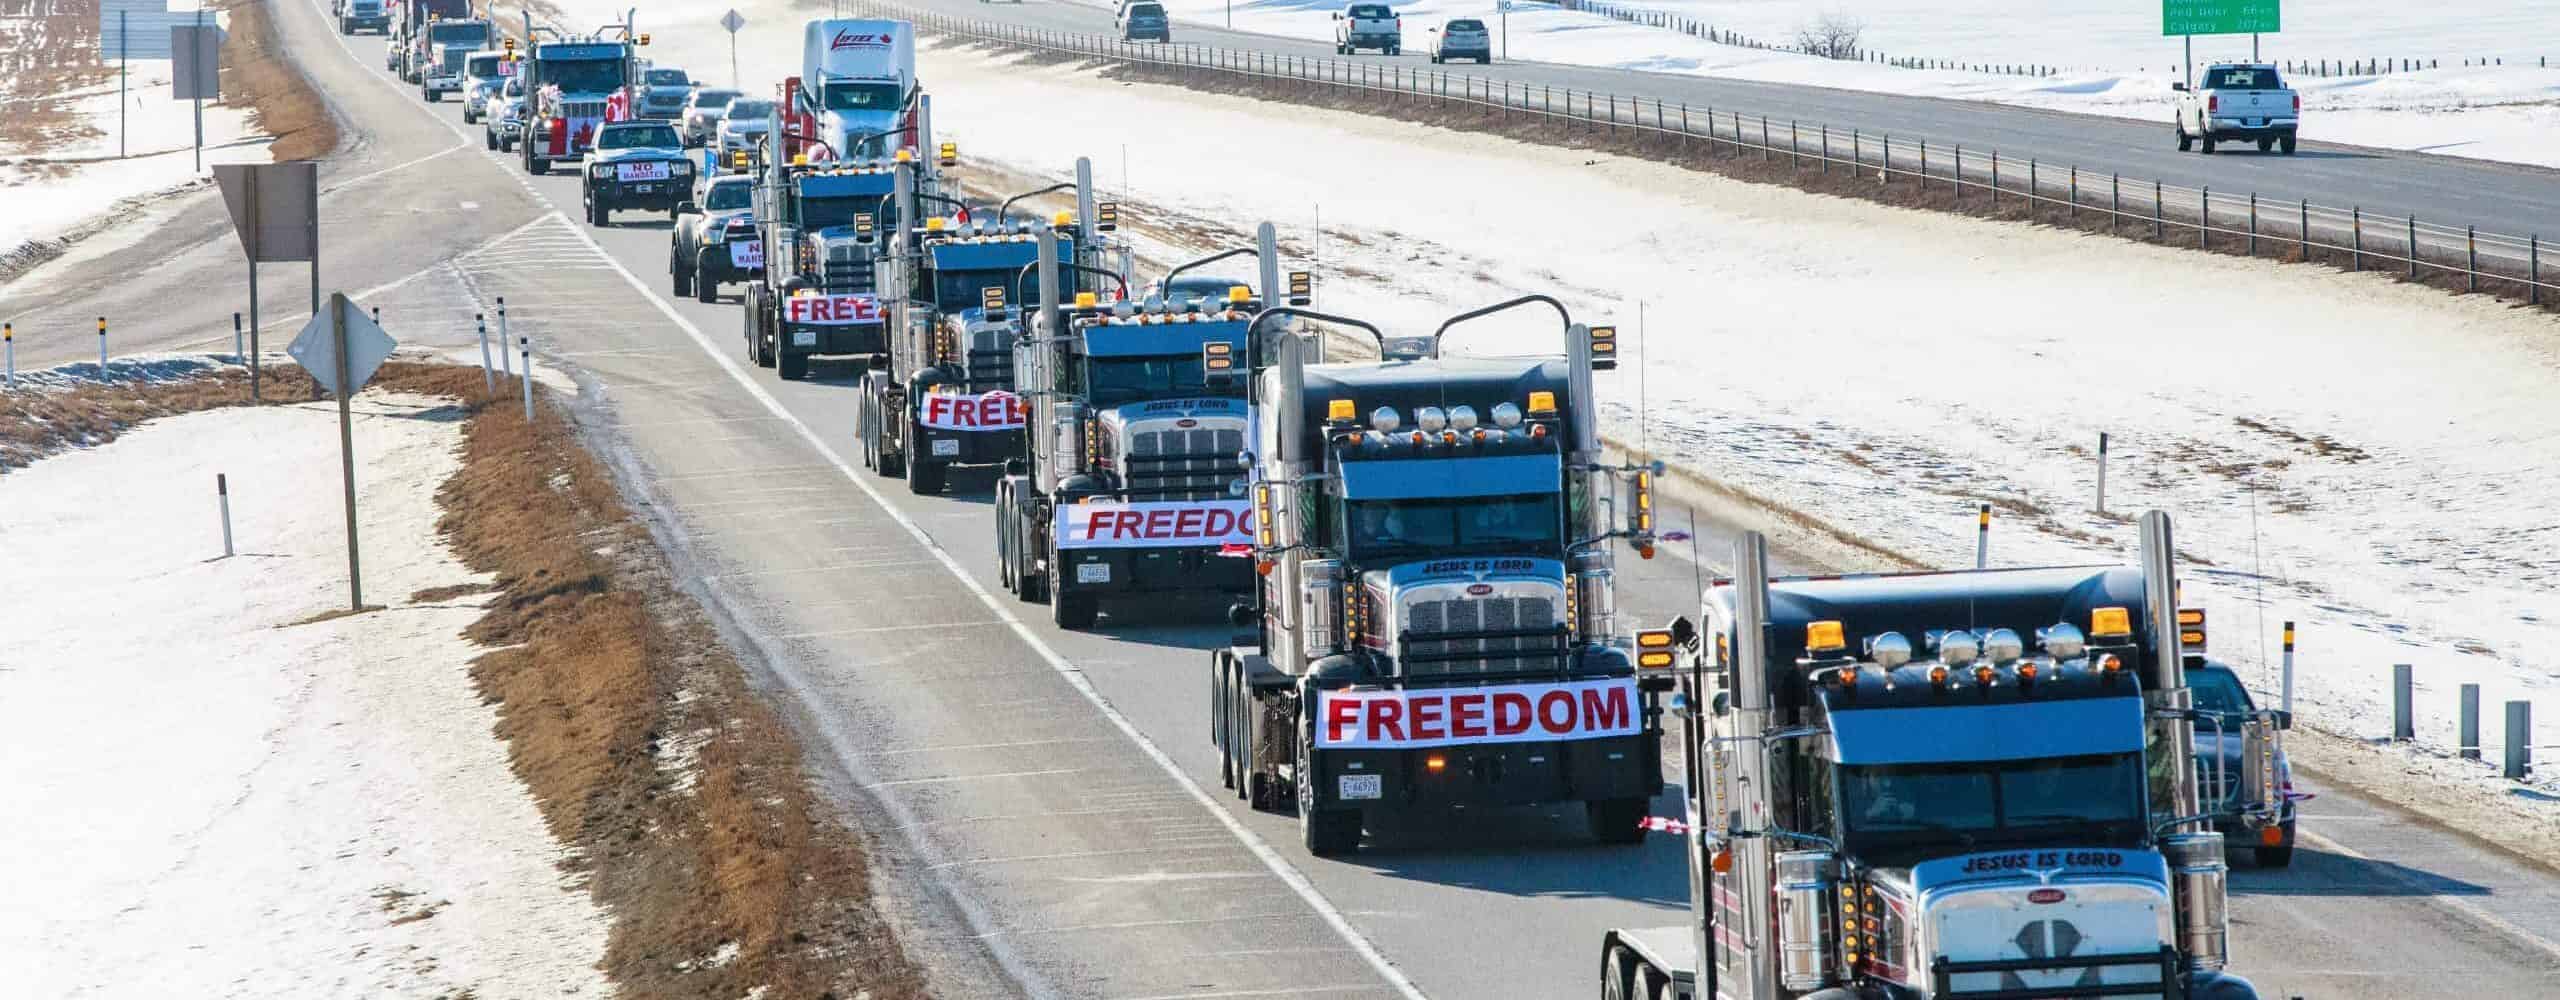 Freedom Convoy in Alberta; Image by Naomi McKinney, Unsplash